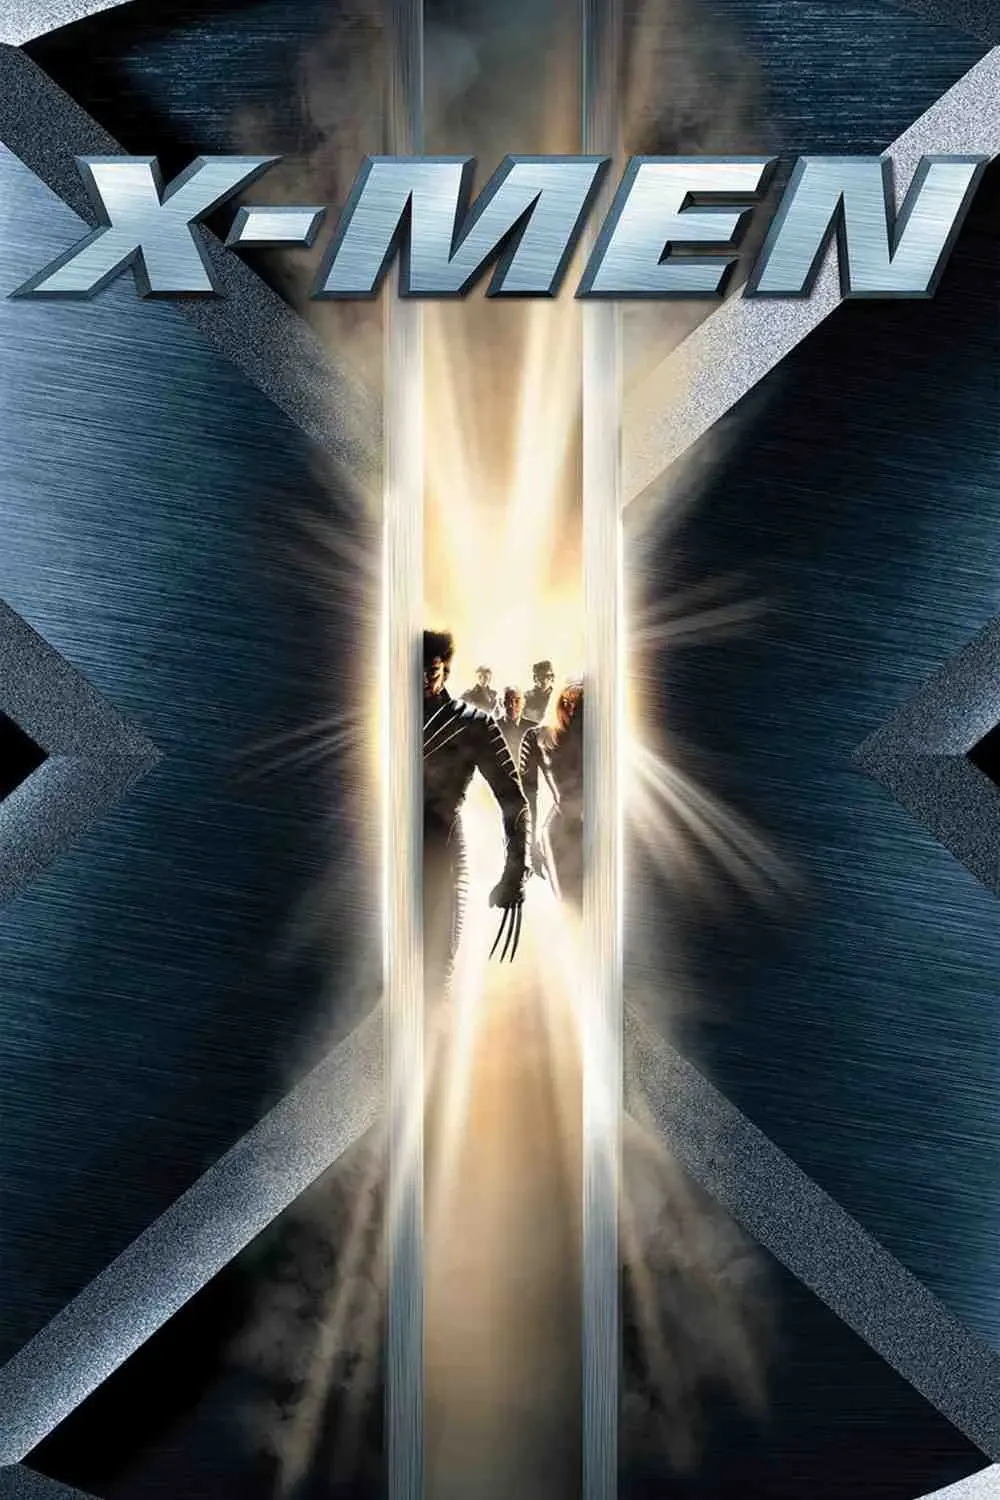 X-Men at First Friday...